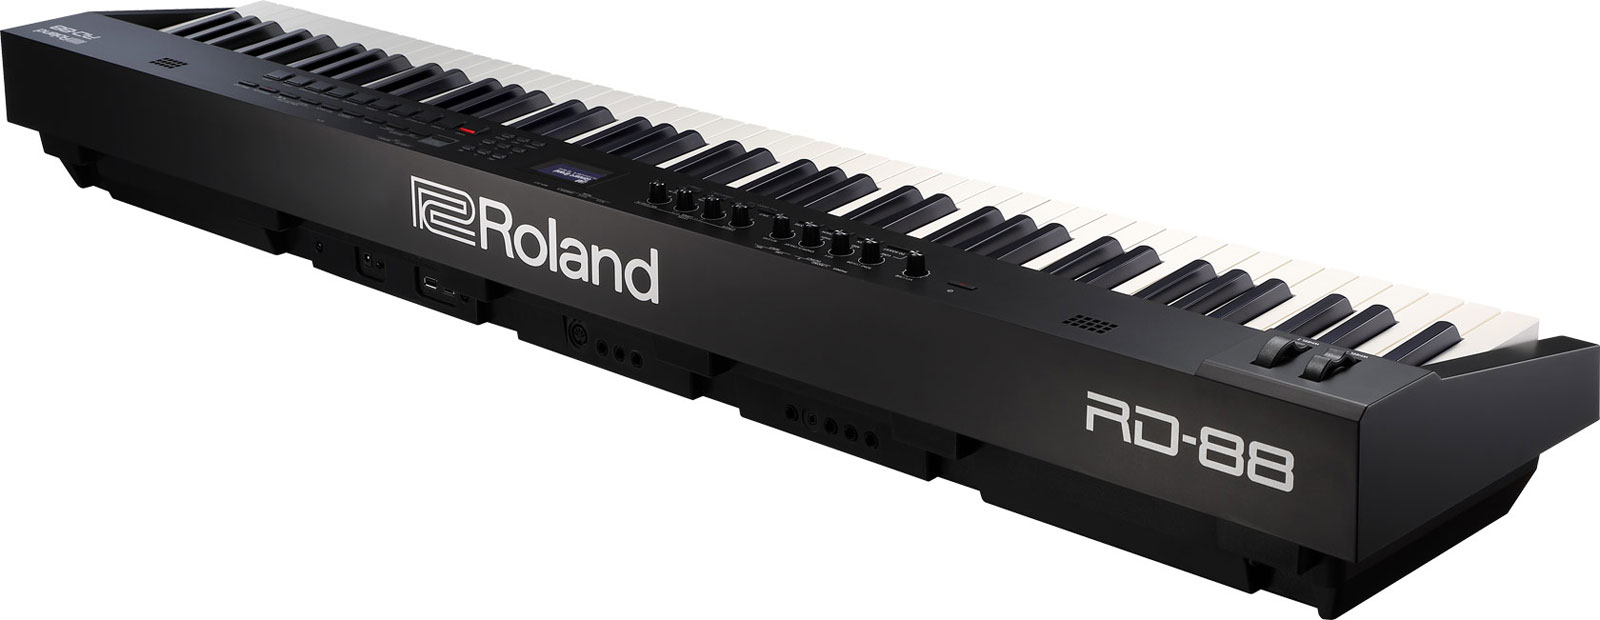 Roland Rd-88 - Stage keyboard - Variation 3